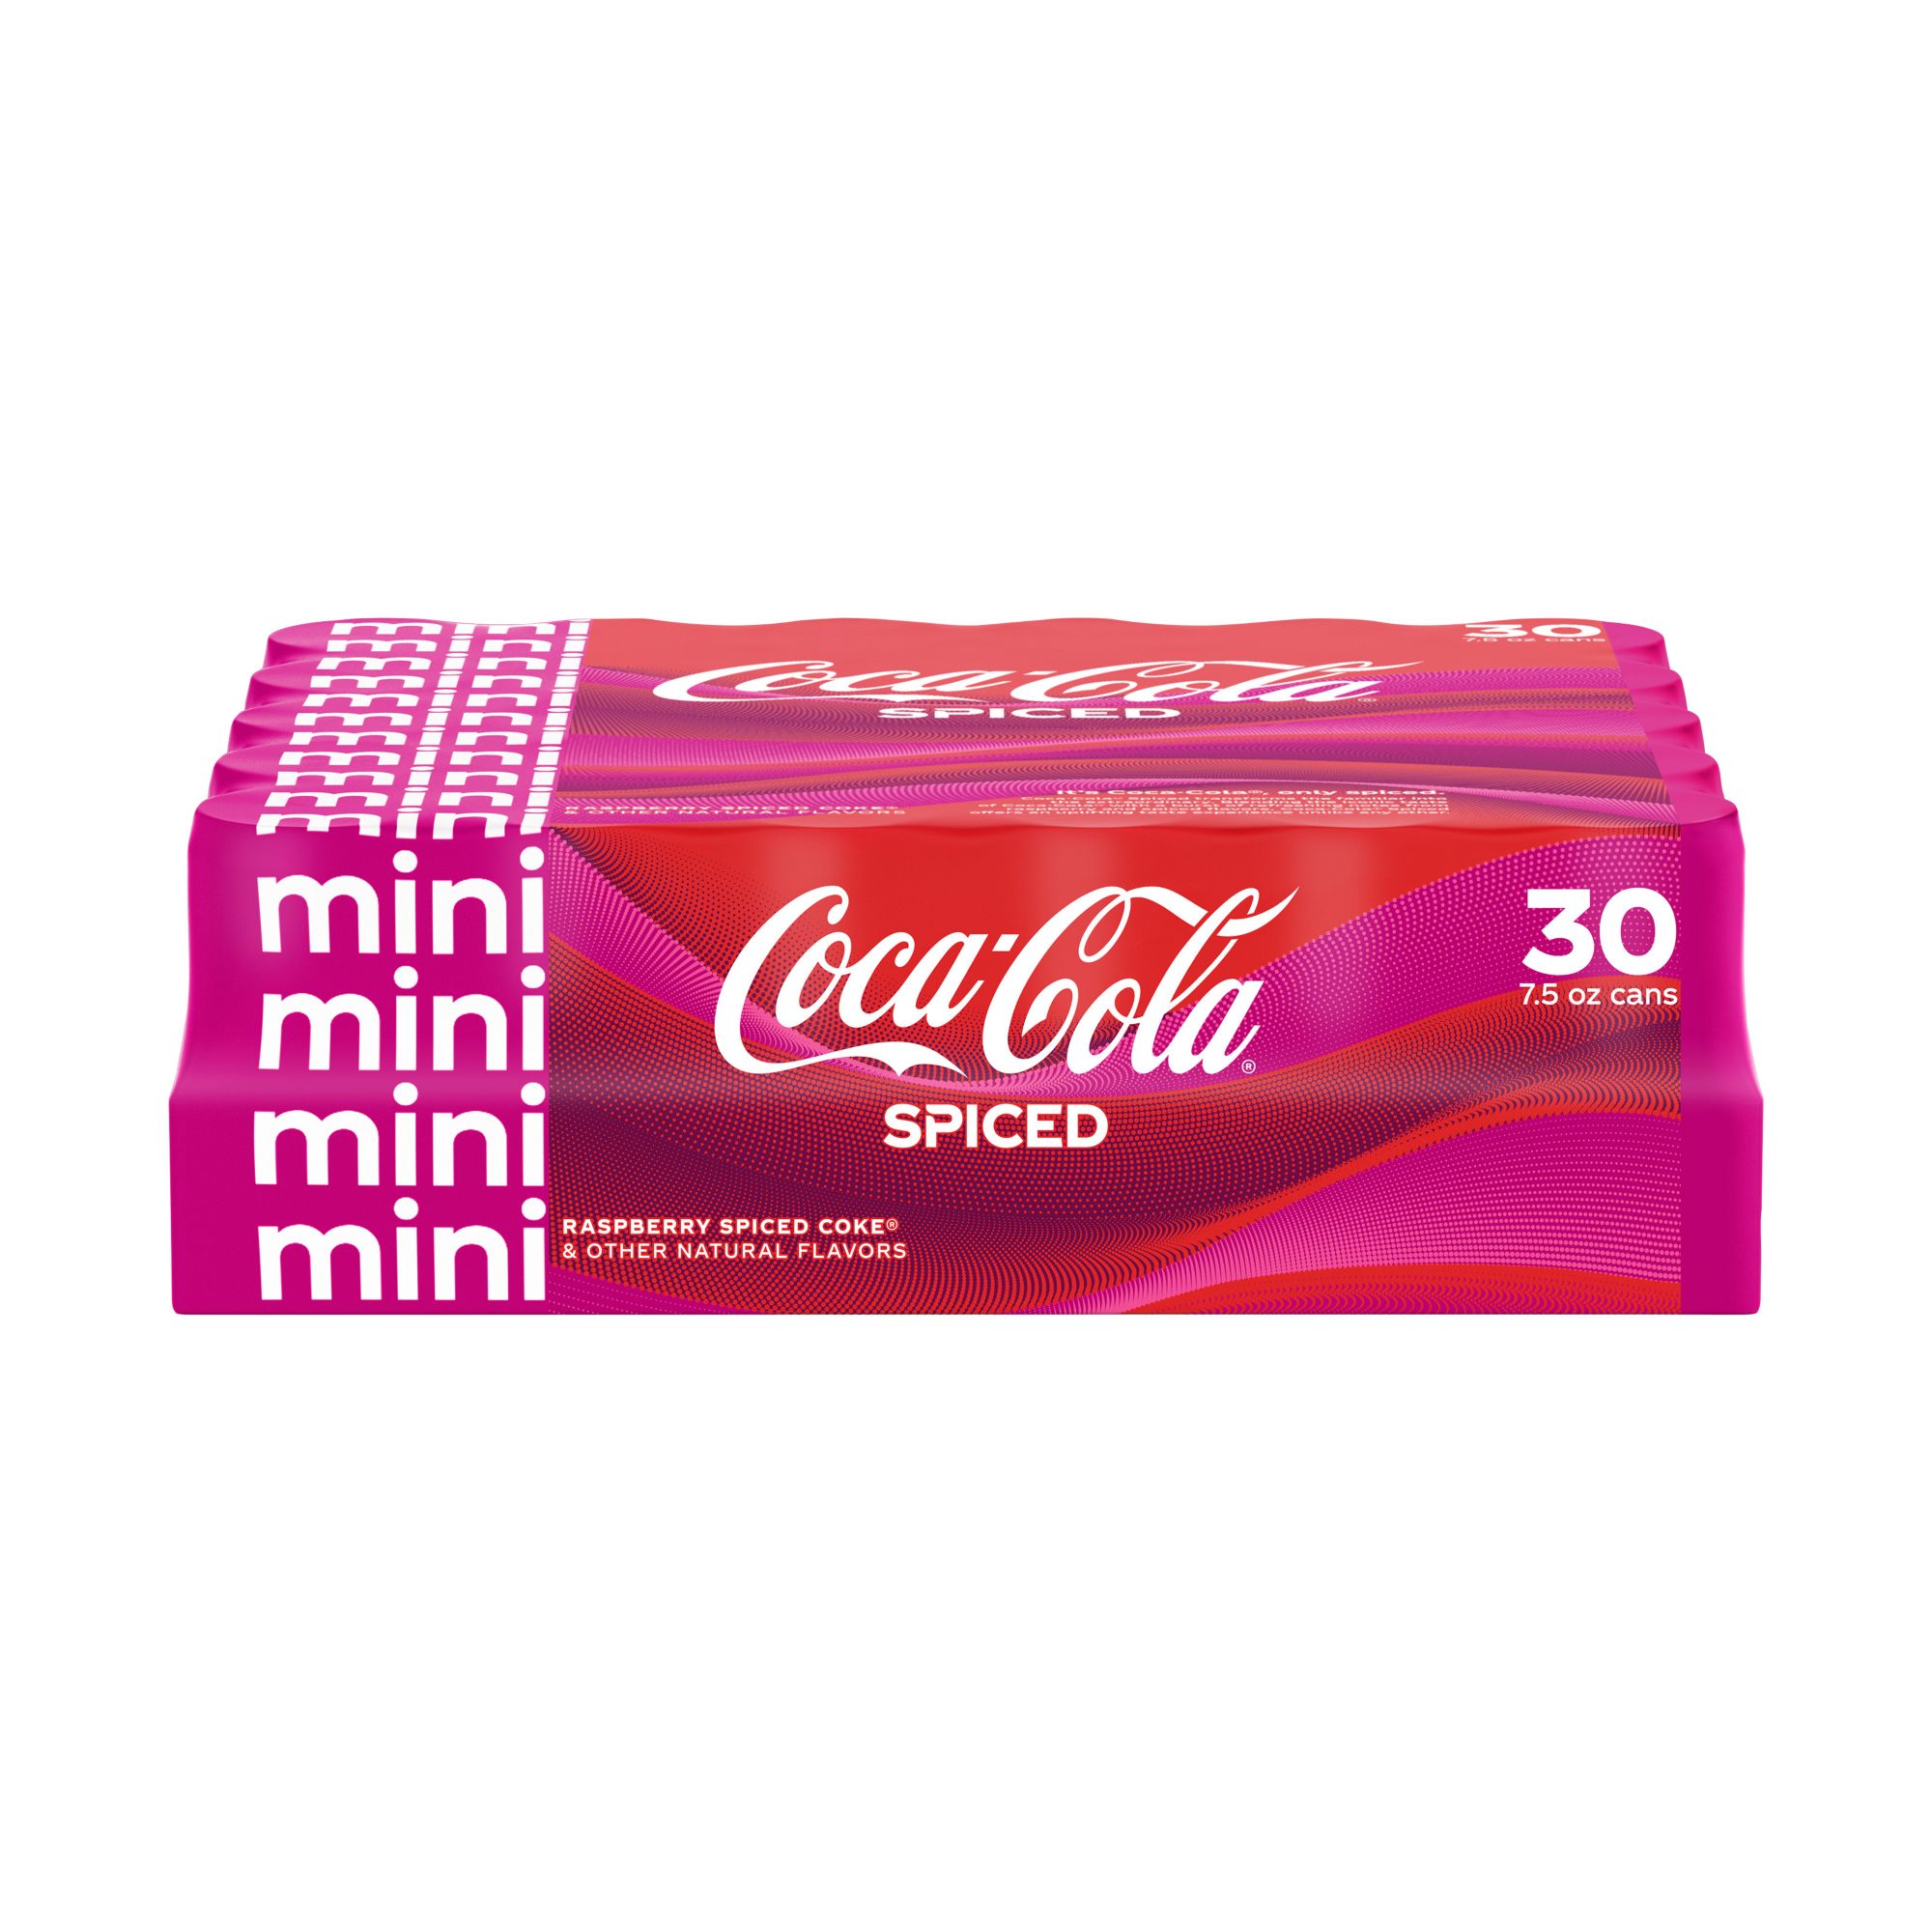 Coca-Cola Spiced Mini Cans, 30 pk./7.5 oz.